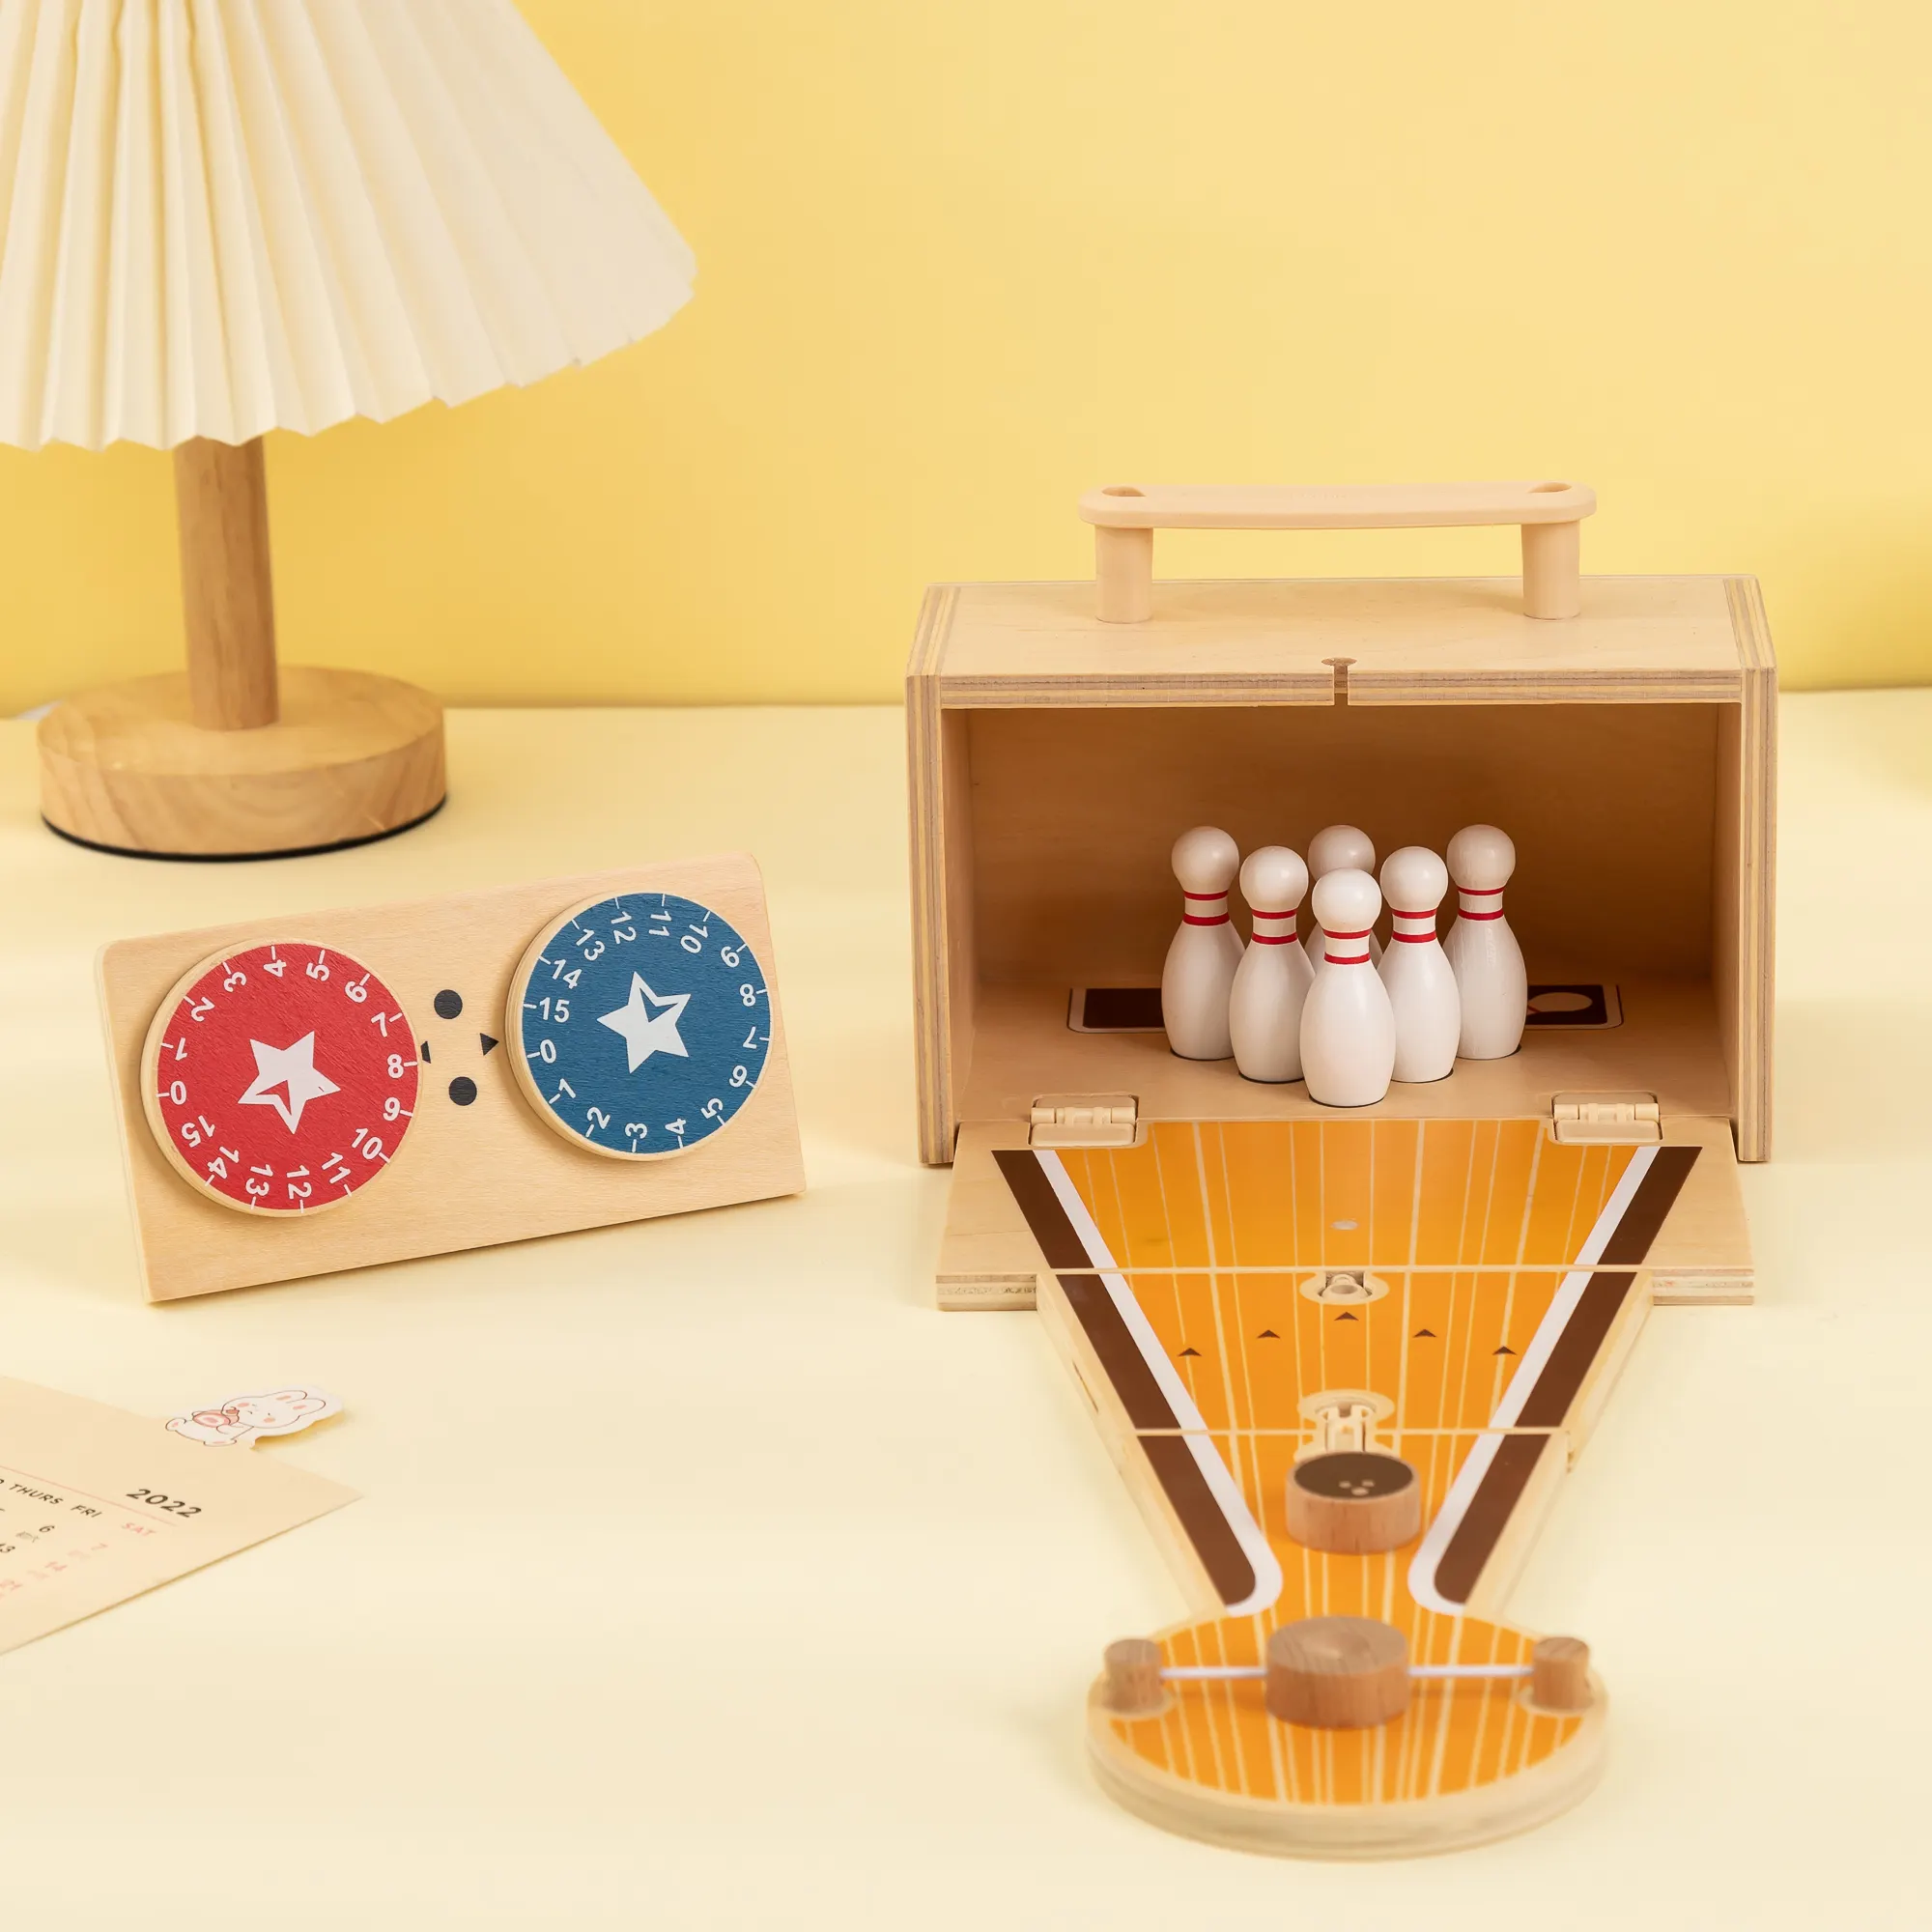 UDEASキッズテーブルゲームおもちゃ子供のための屋内卓上ミニ木製ボウリングゲーム